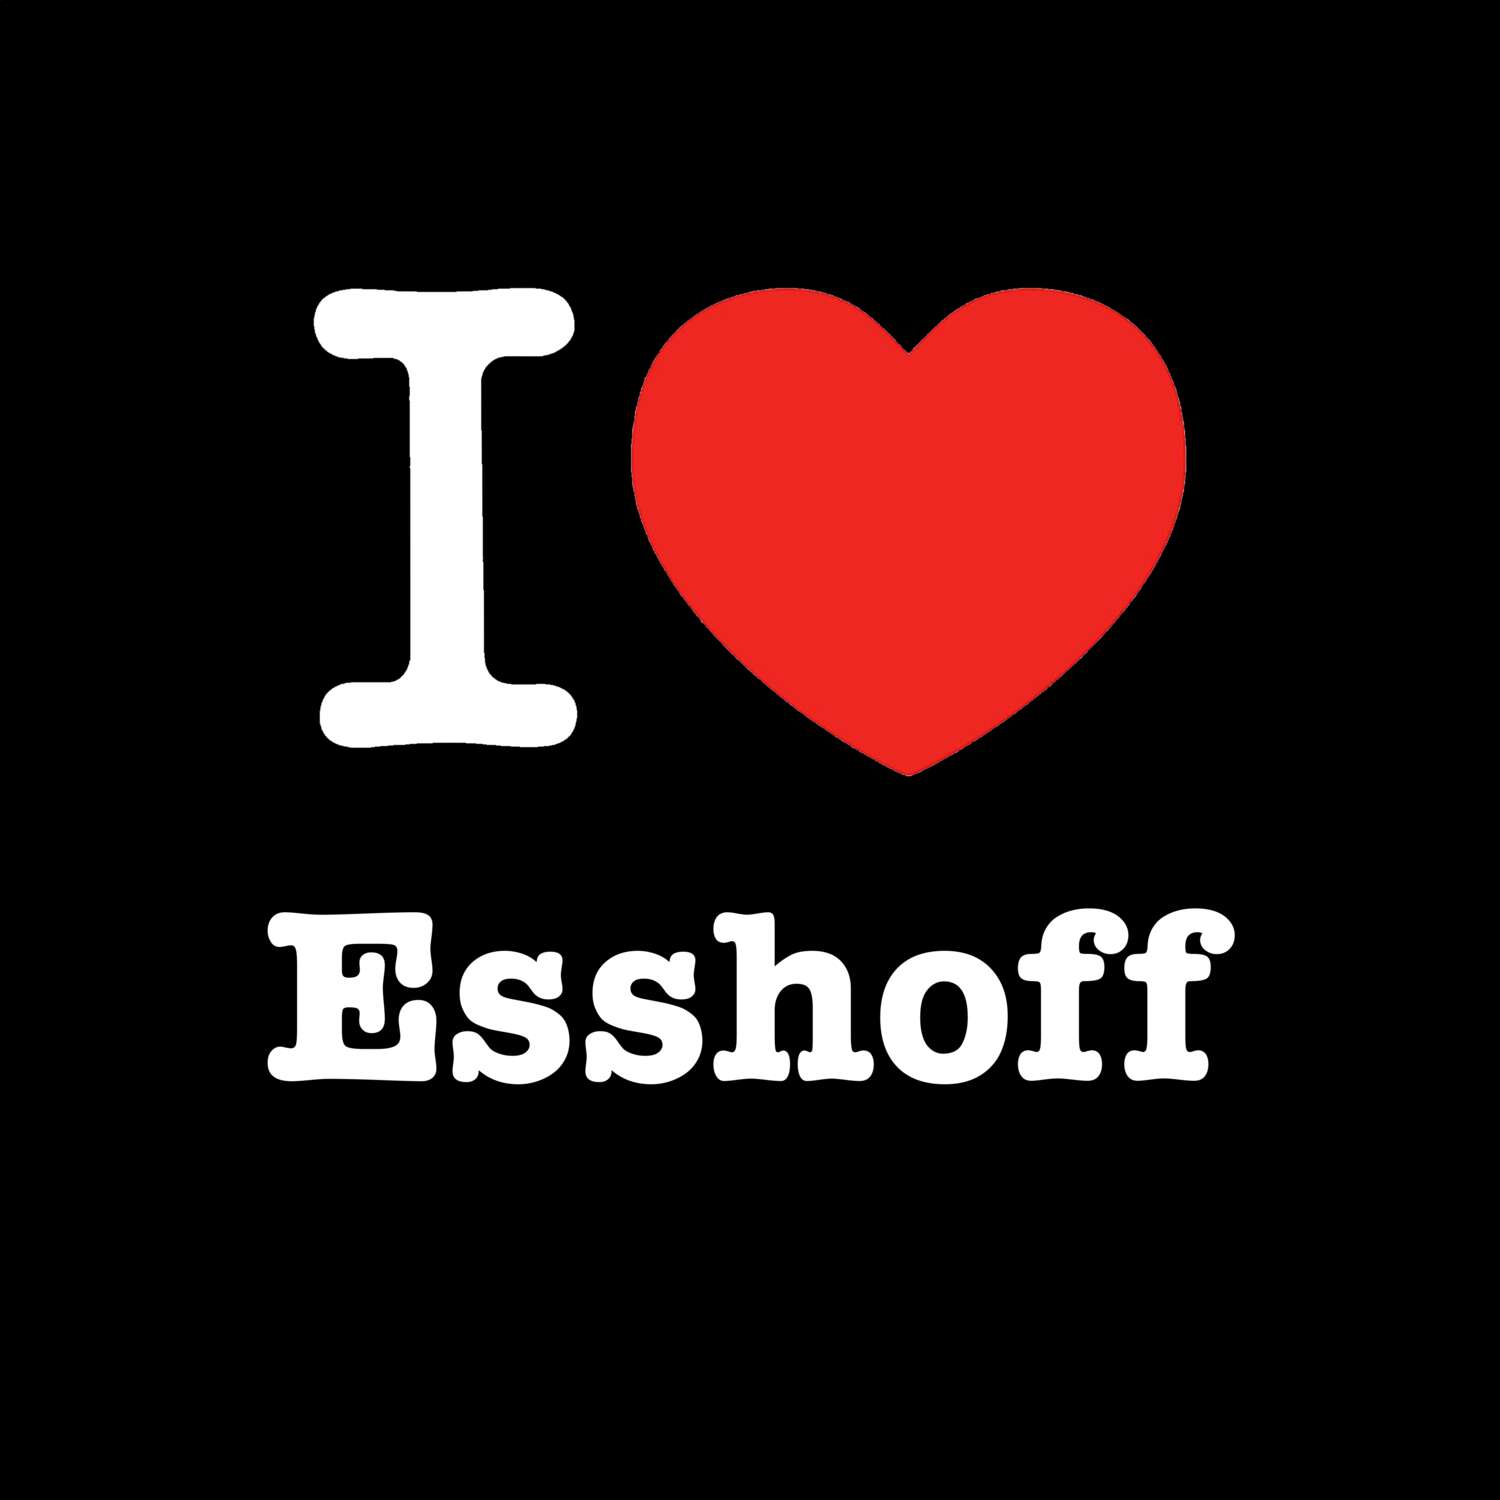 Esshoff T-Shirt »I love«